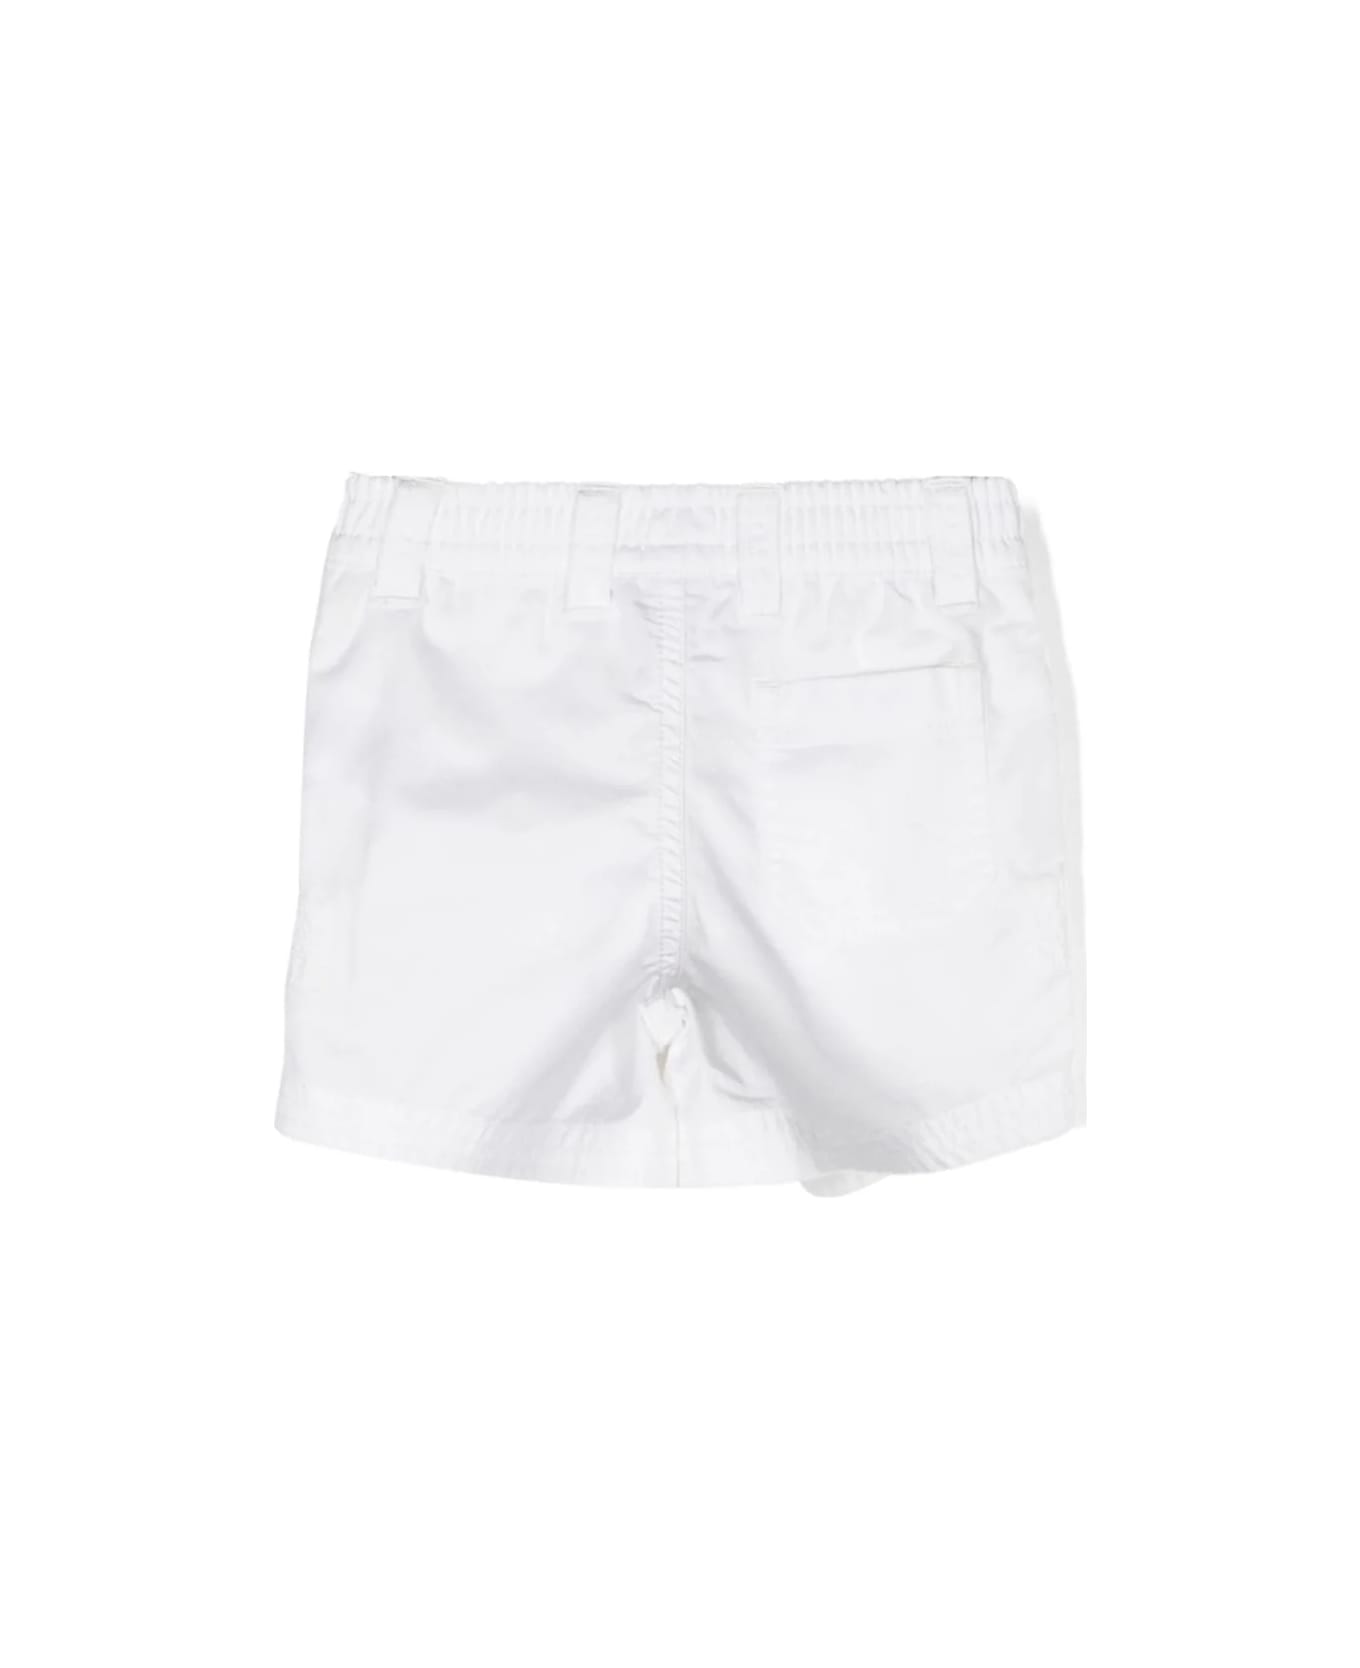 Ralph Lauren White Cotton Chino Shorts - White